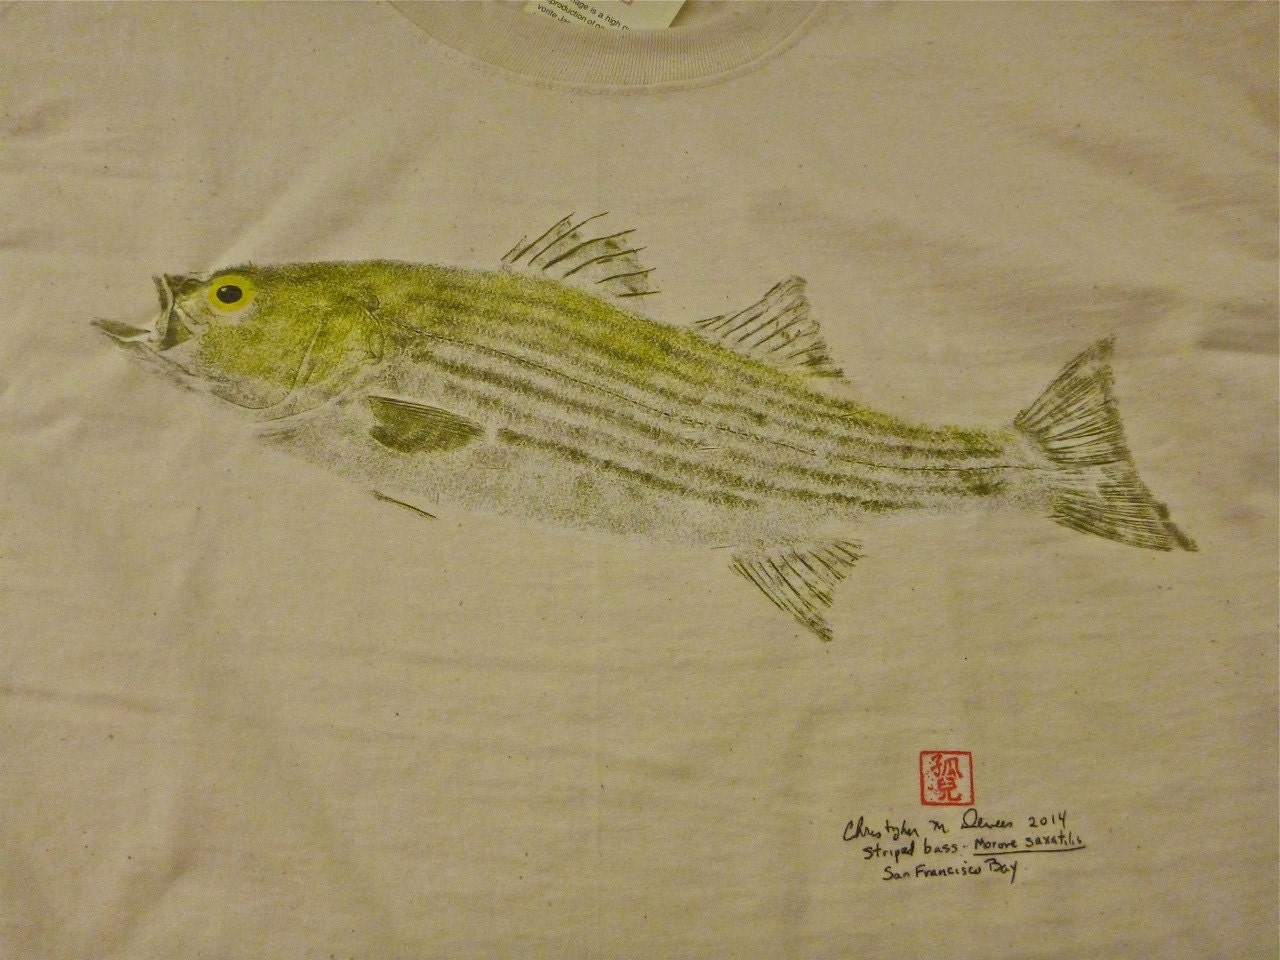 Fish Graphic Design Tee Shirt - Stripped Bass & Marlin